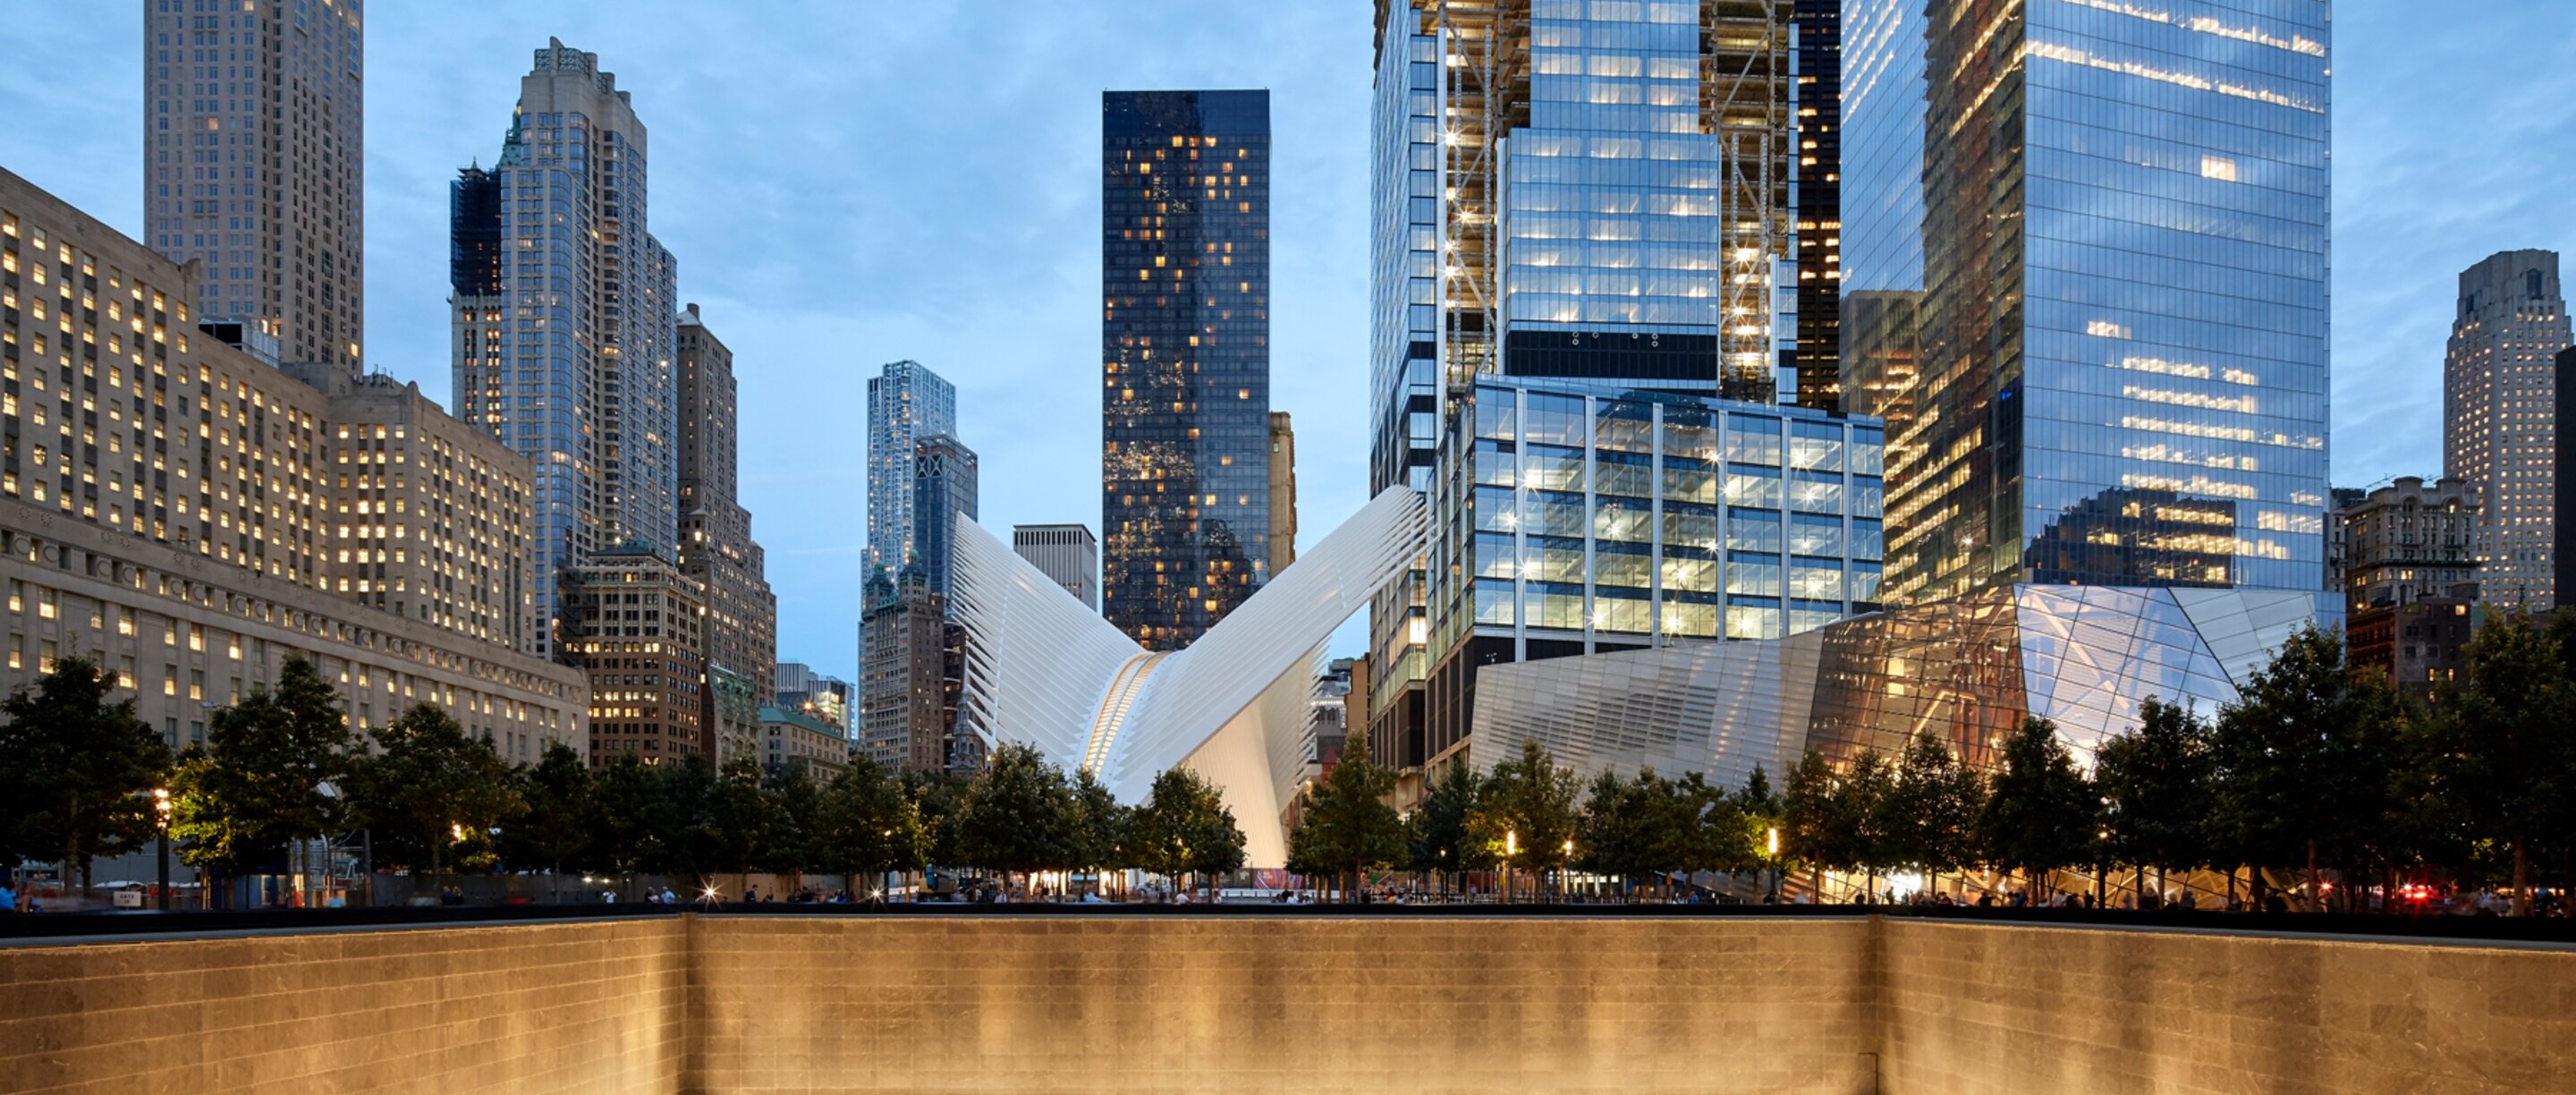 "Transportation Hub" facade design, aluminium, New York | © Osugi, Shutterstock